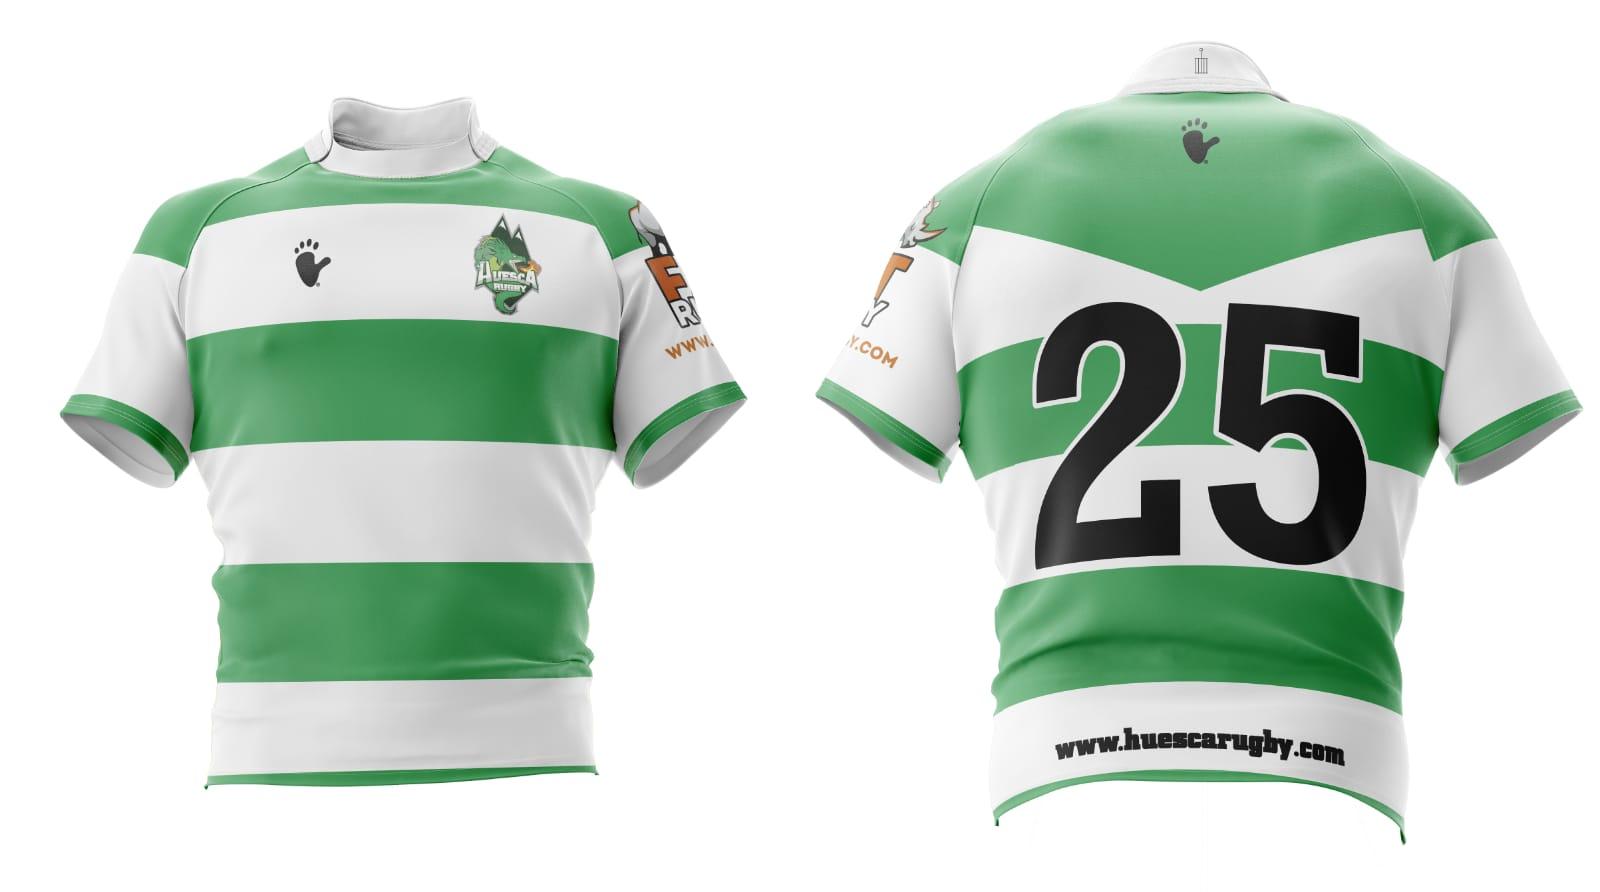 Camiseta Juego Huesca Rugby - Talla 8